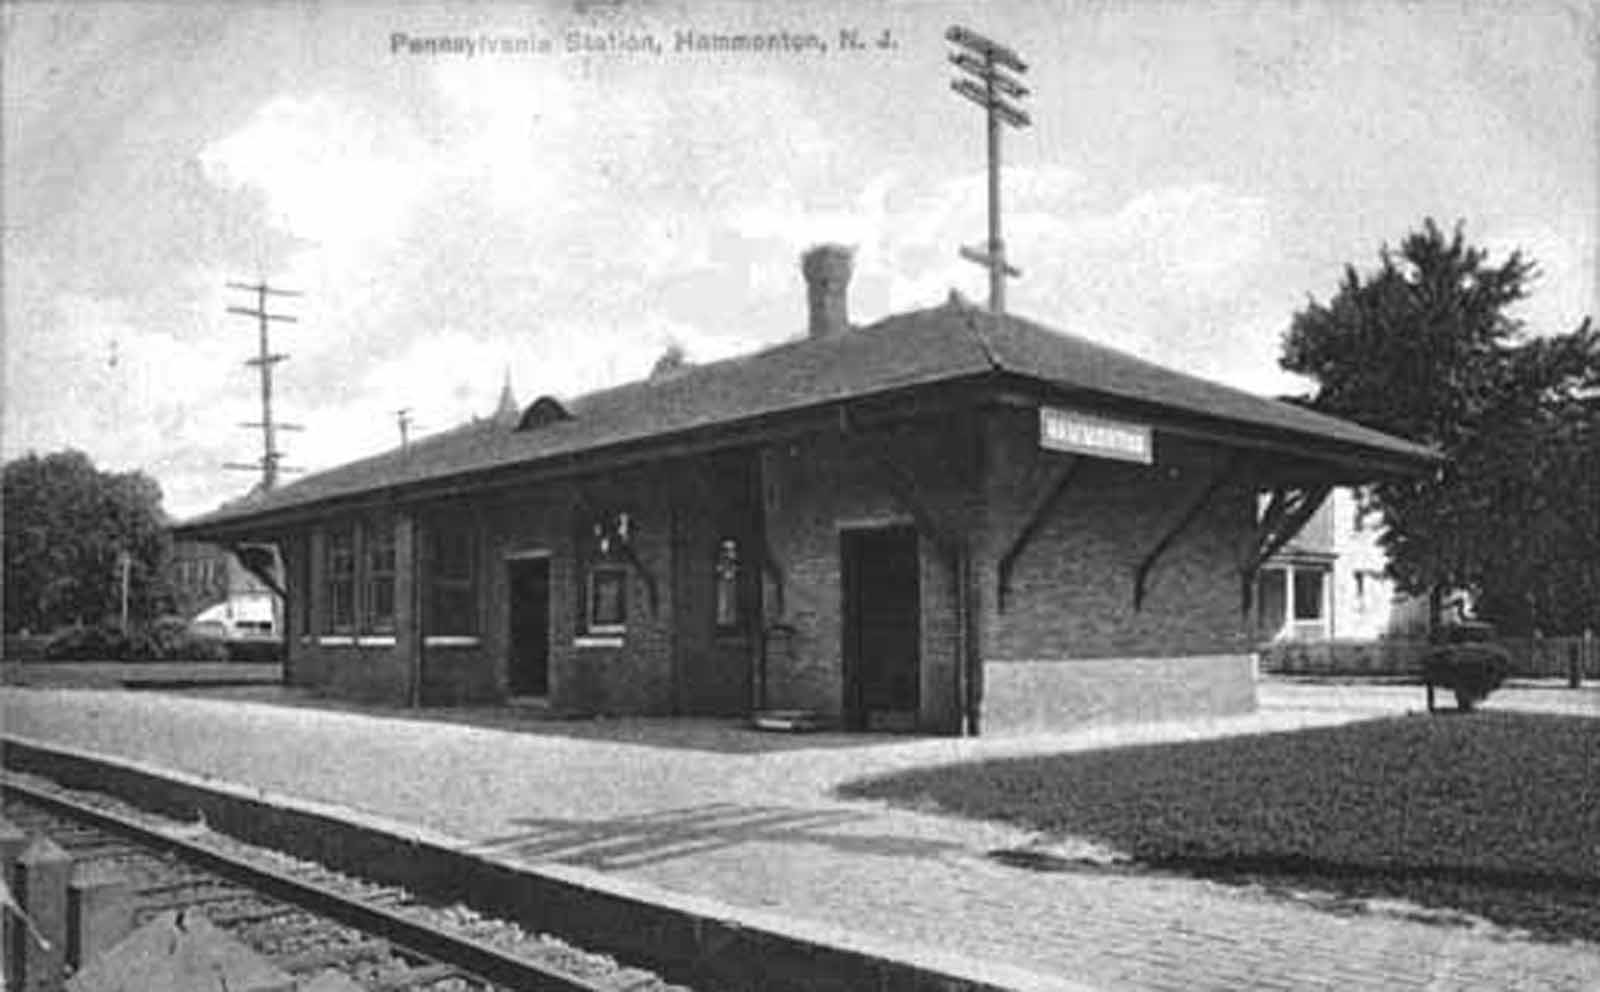 Hammonton - Pennsyvania Railroad Depot - 1915